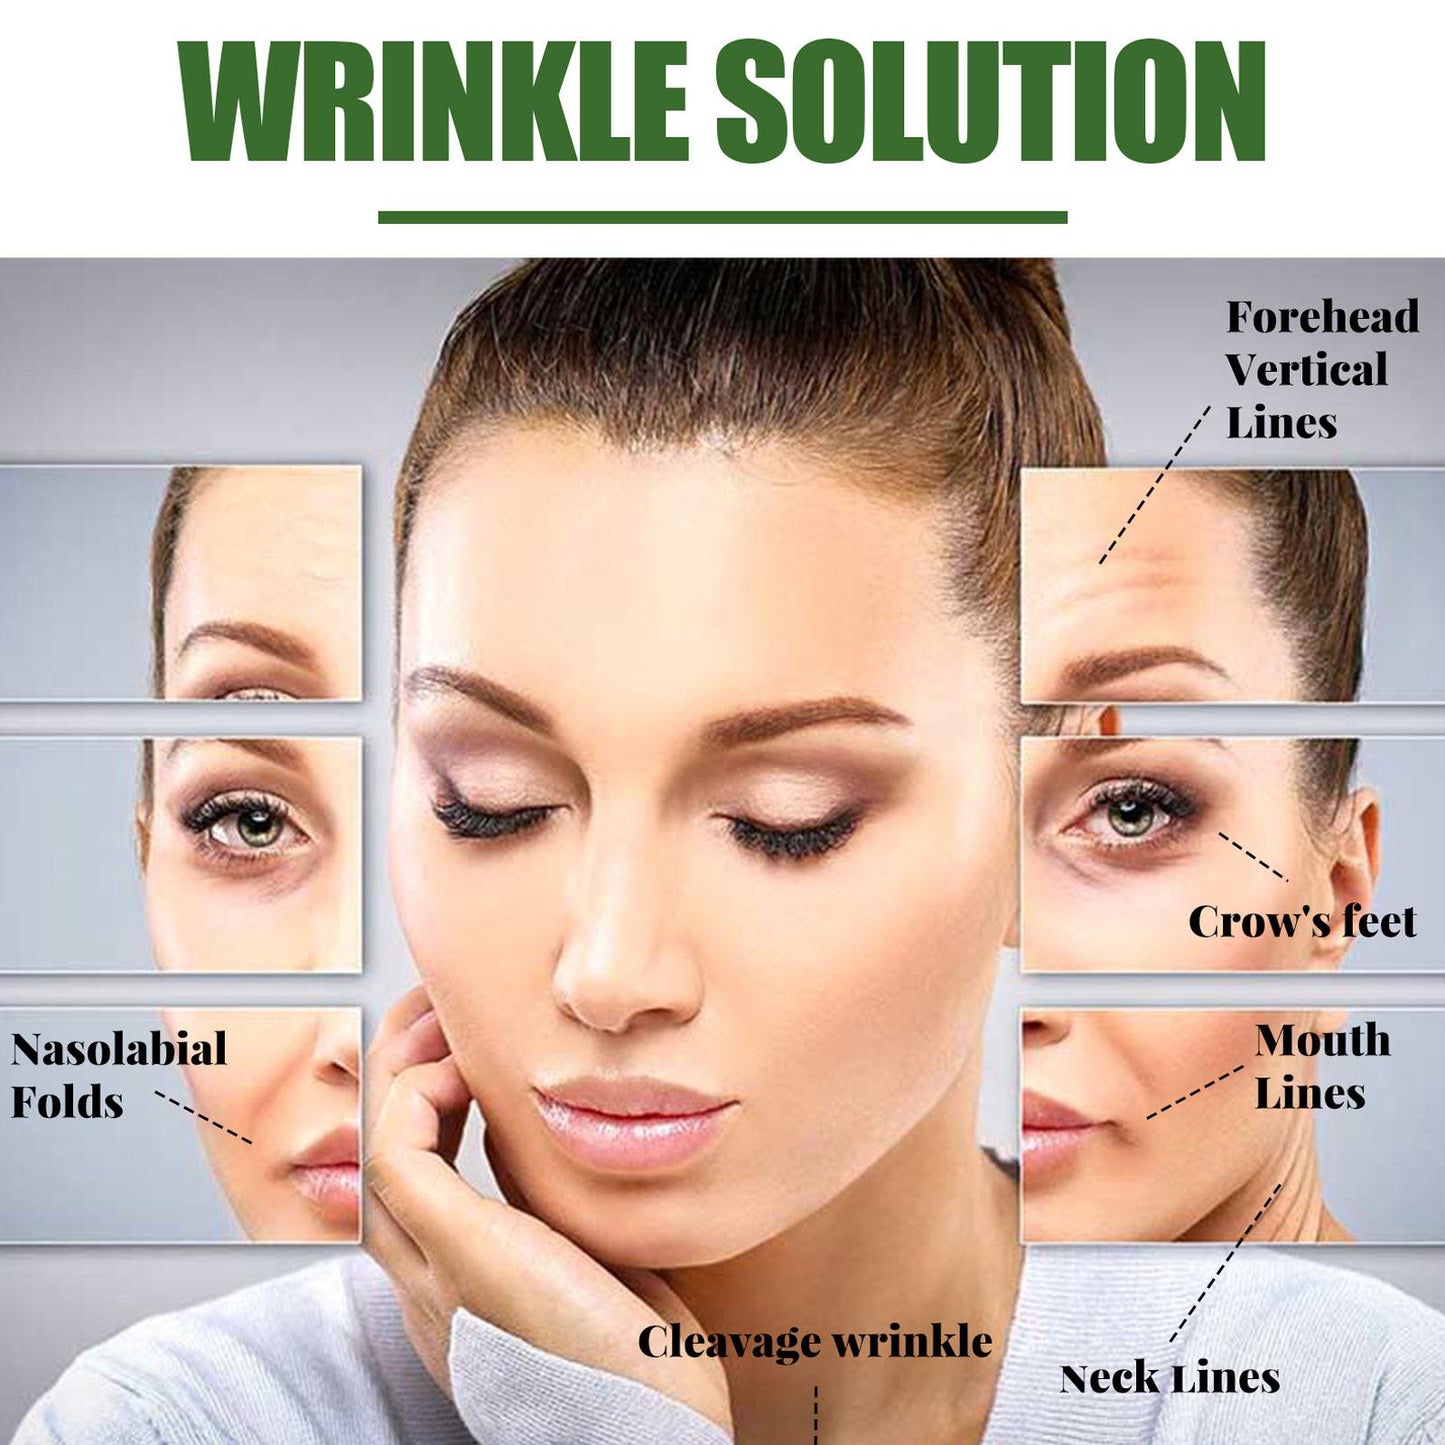 EELHOE™ Deep Anti-Wrinkle and Anti-Aging Serum